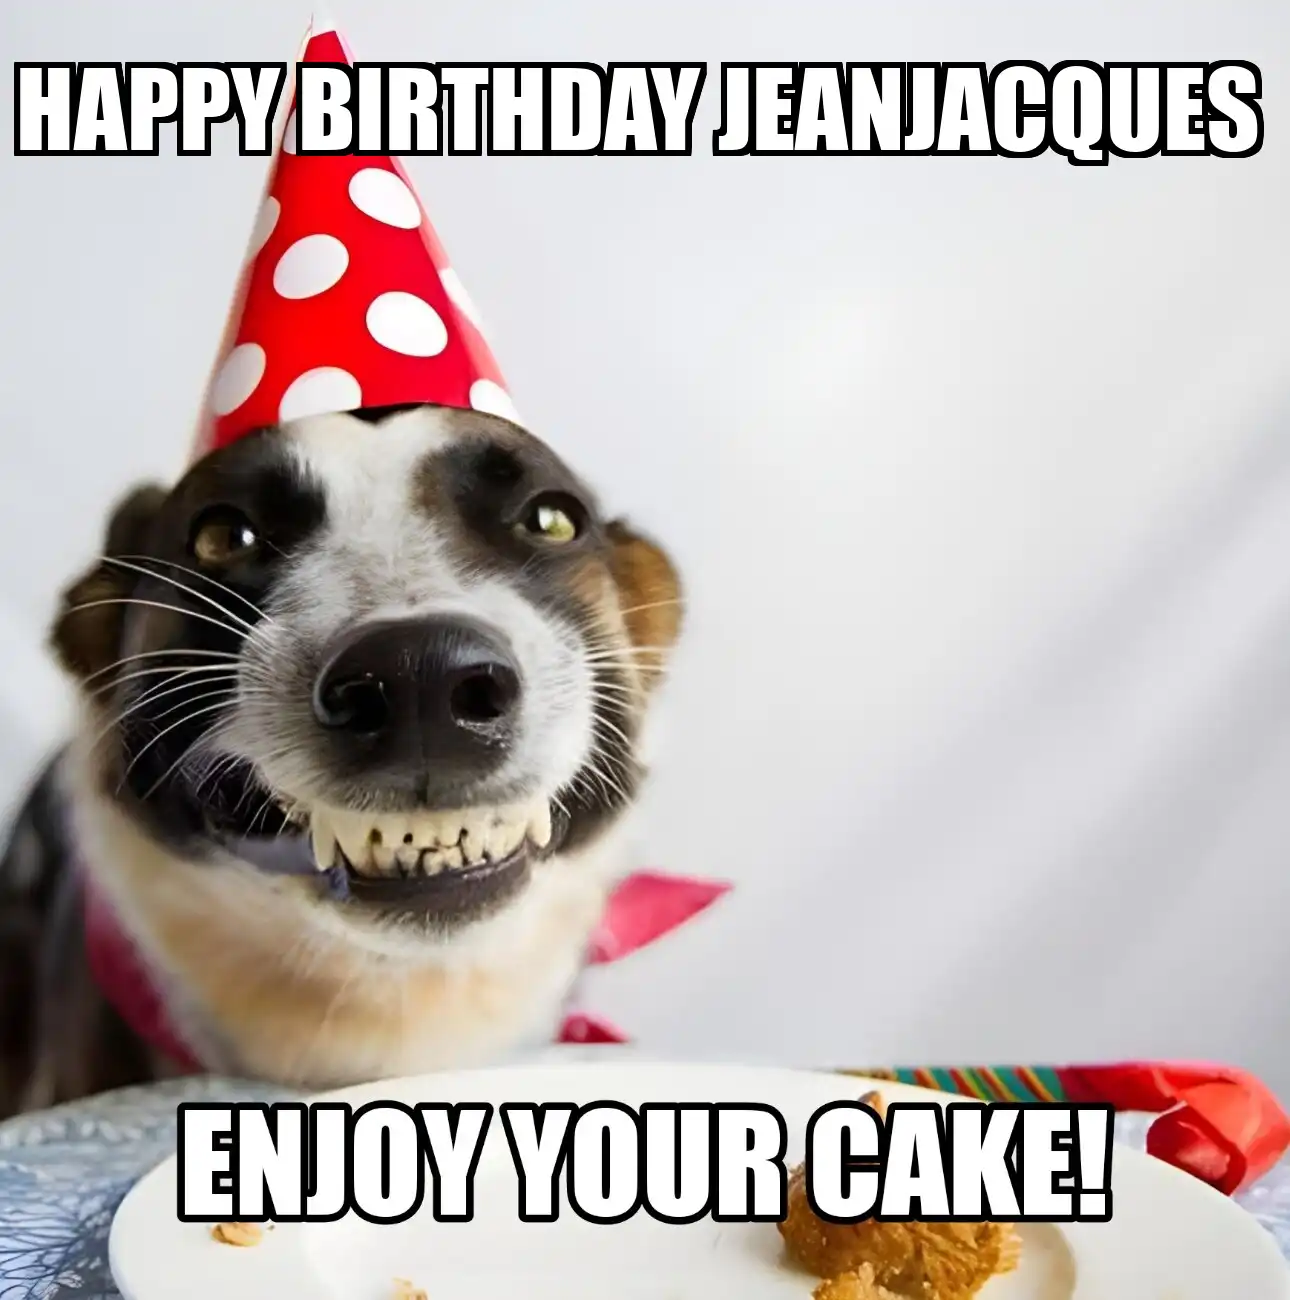 Happy Birthday Jeanjacques Enjoy Your Cake Dog Meme